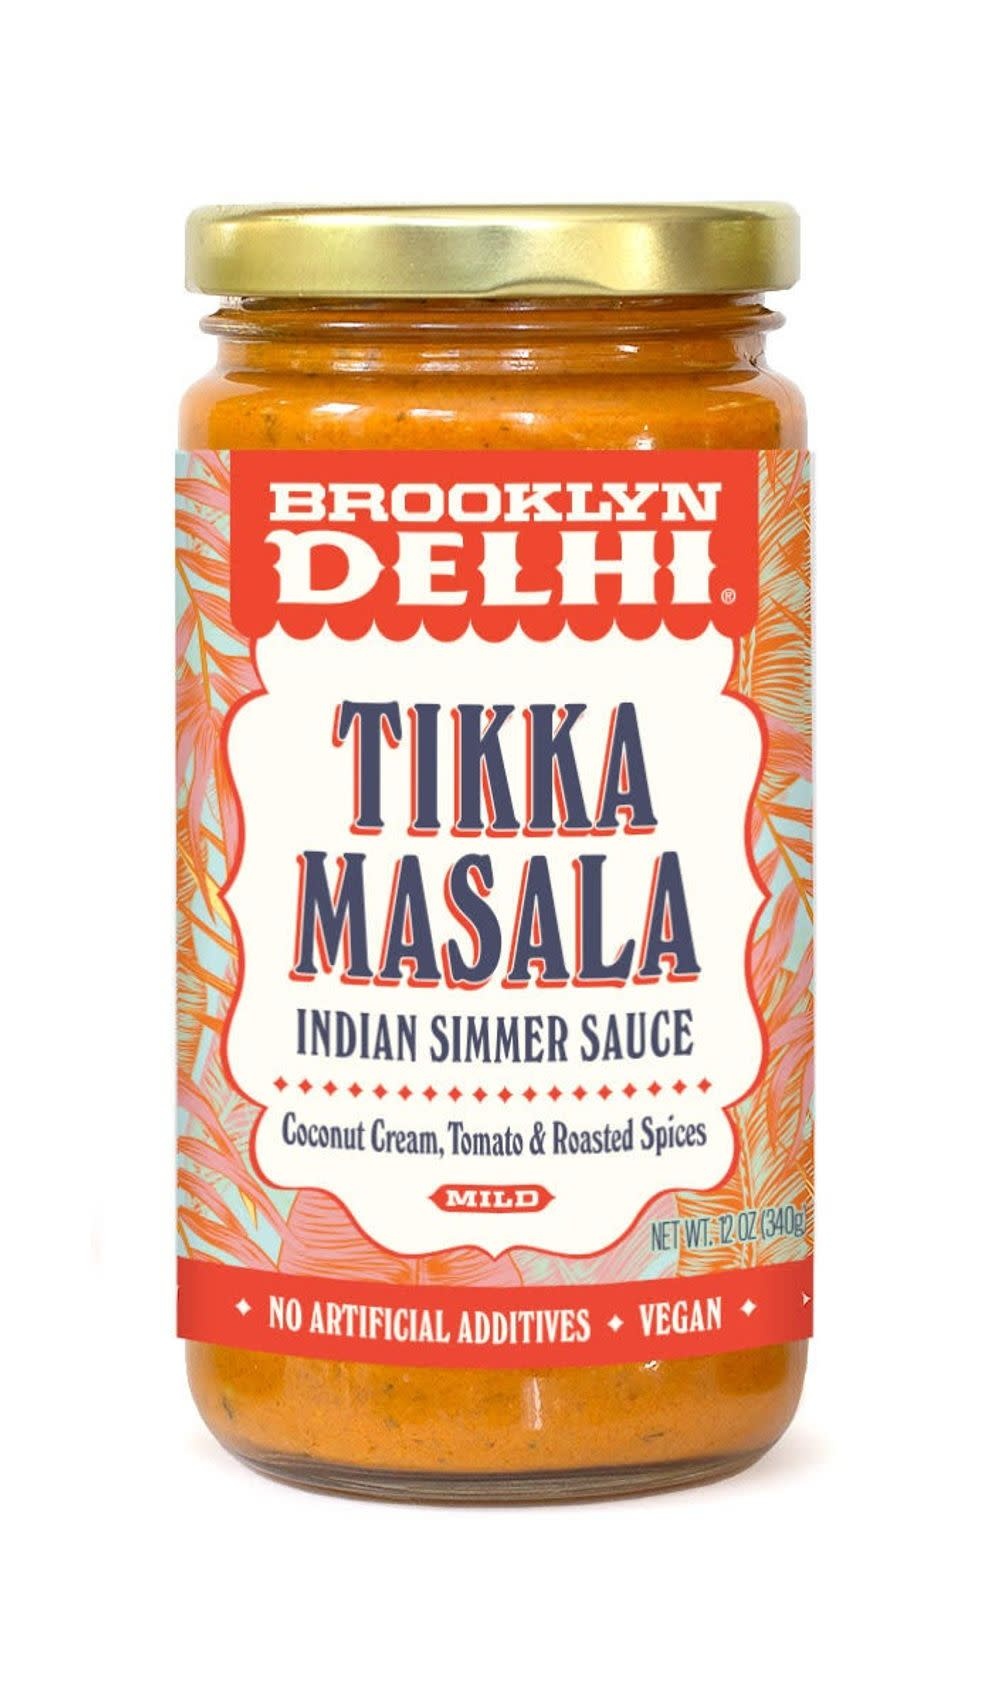 Brooklyn Delhi Tikki Masala Indian Simmer Sauce - single